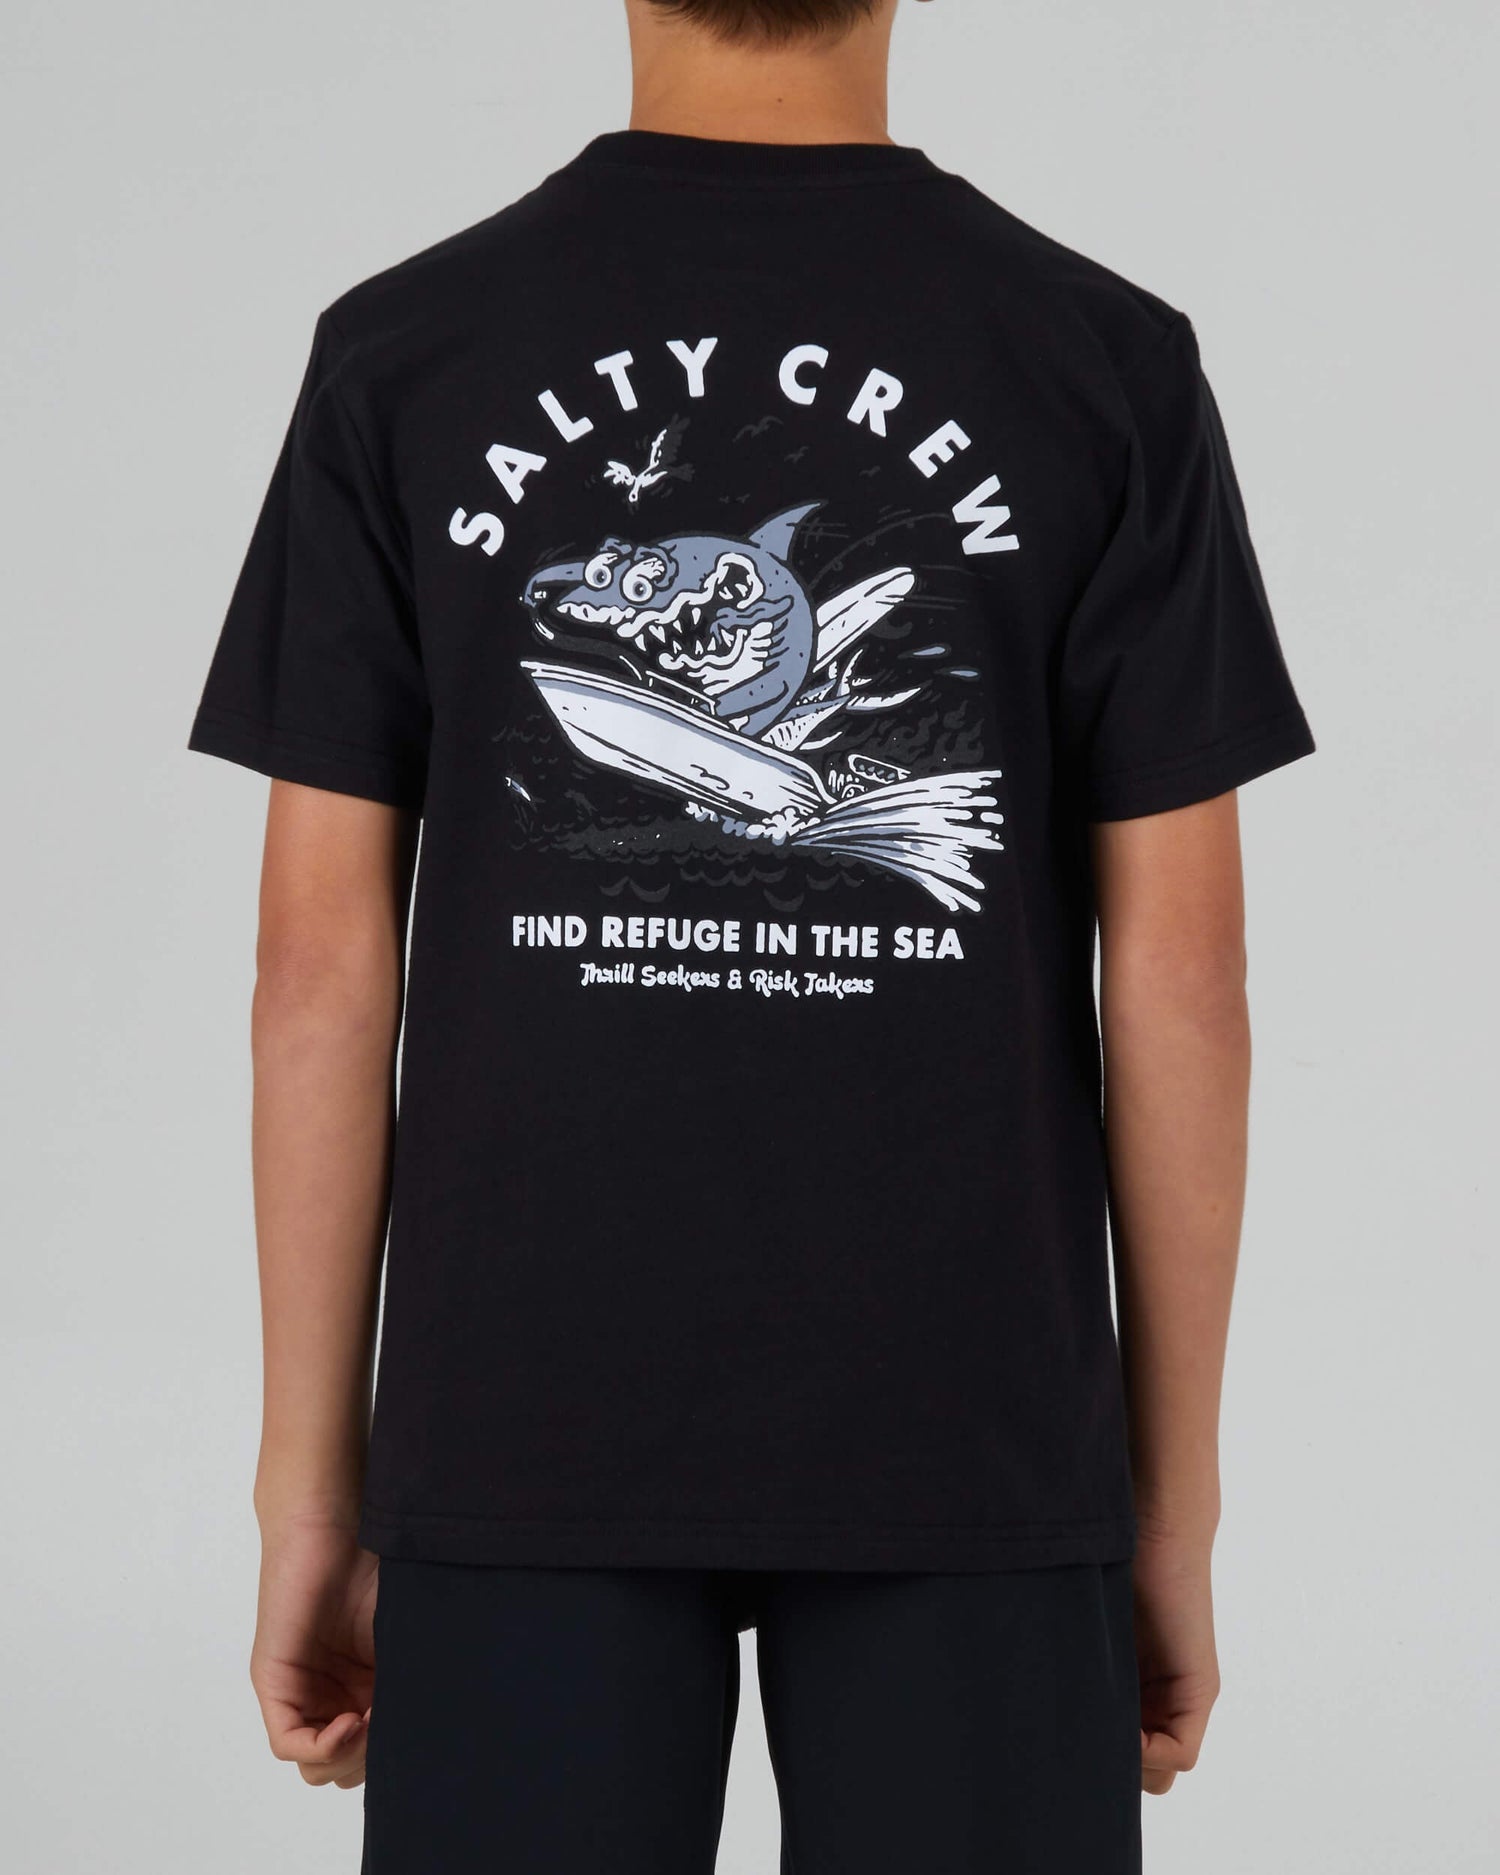 Salty Crew Boys - Hot Rod Tiburón Boys S/S Tee - Black